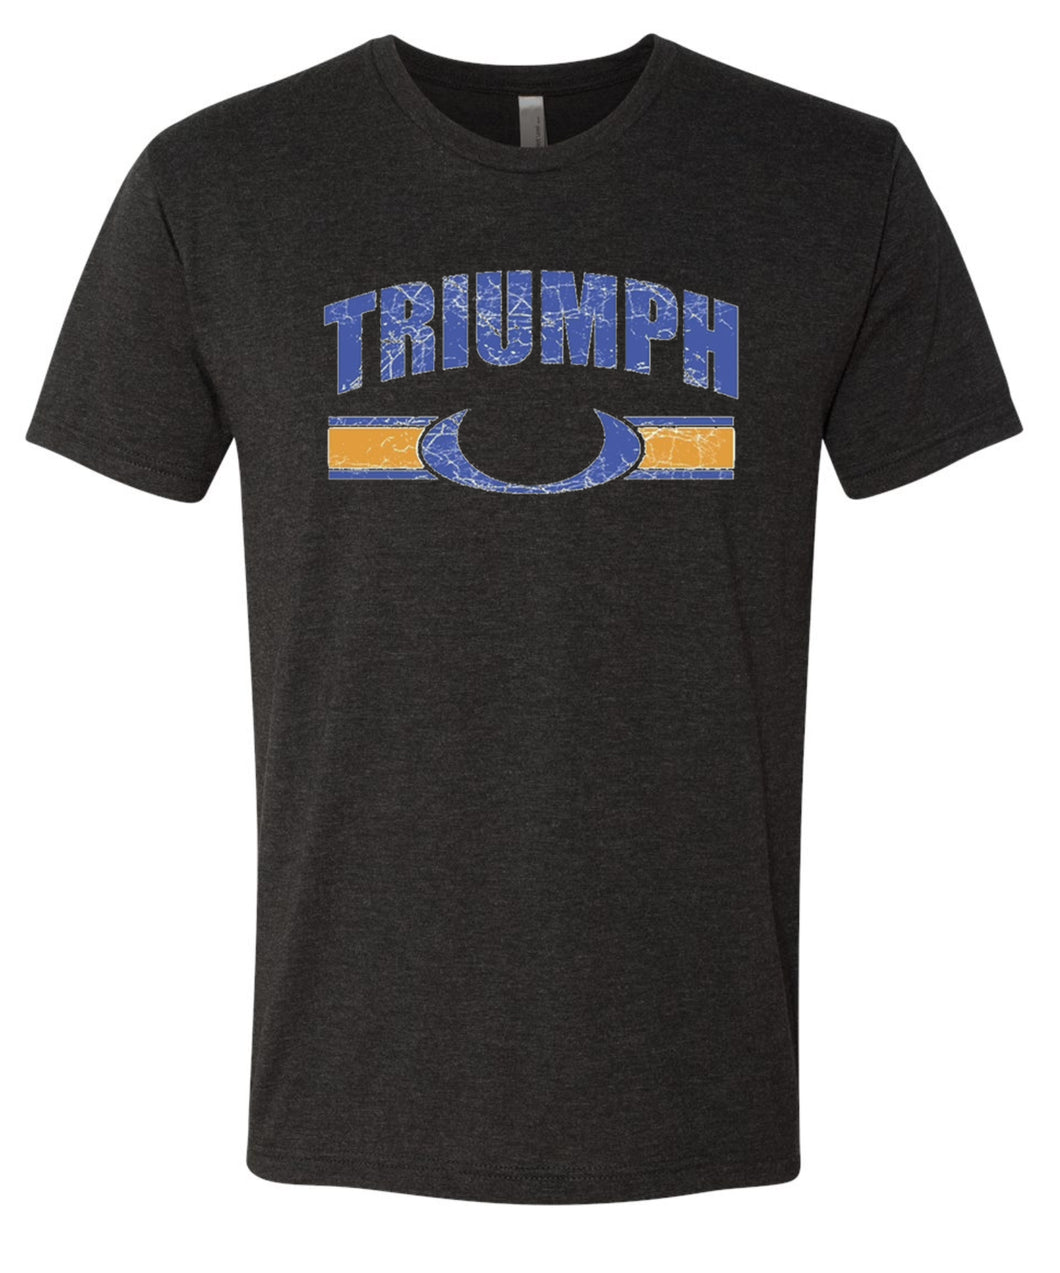 Triumph Fitness Next Level TriBlend Tee 6010